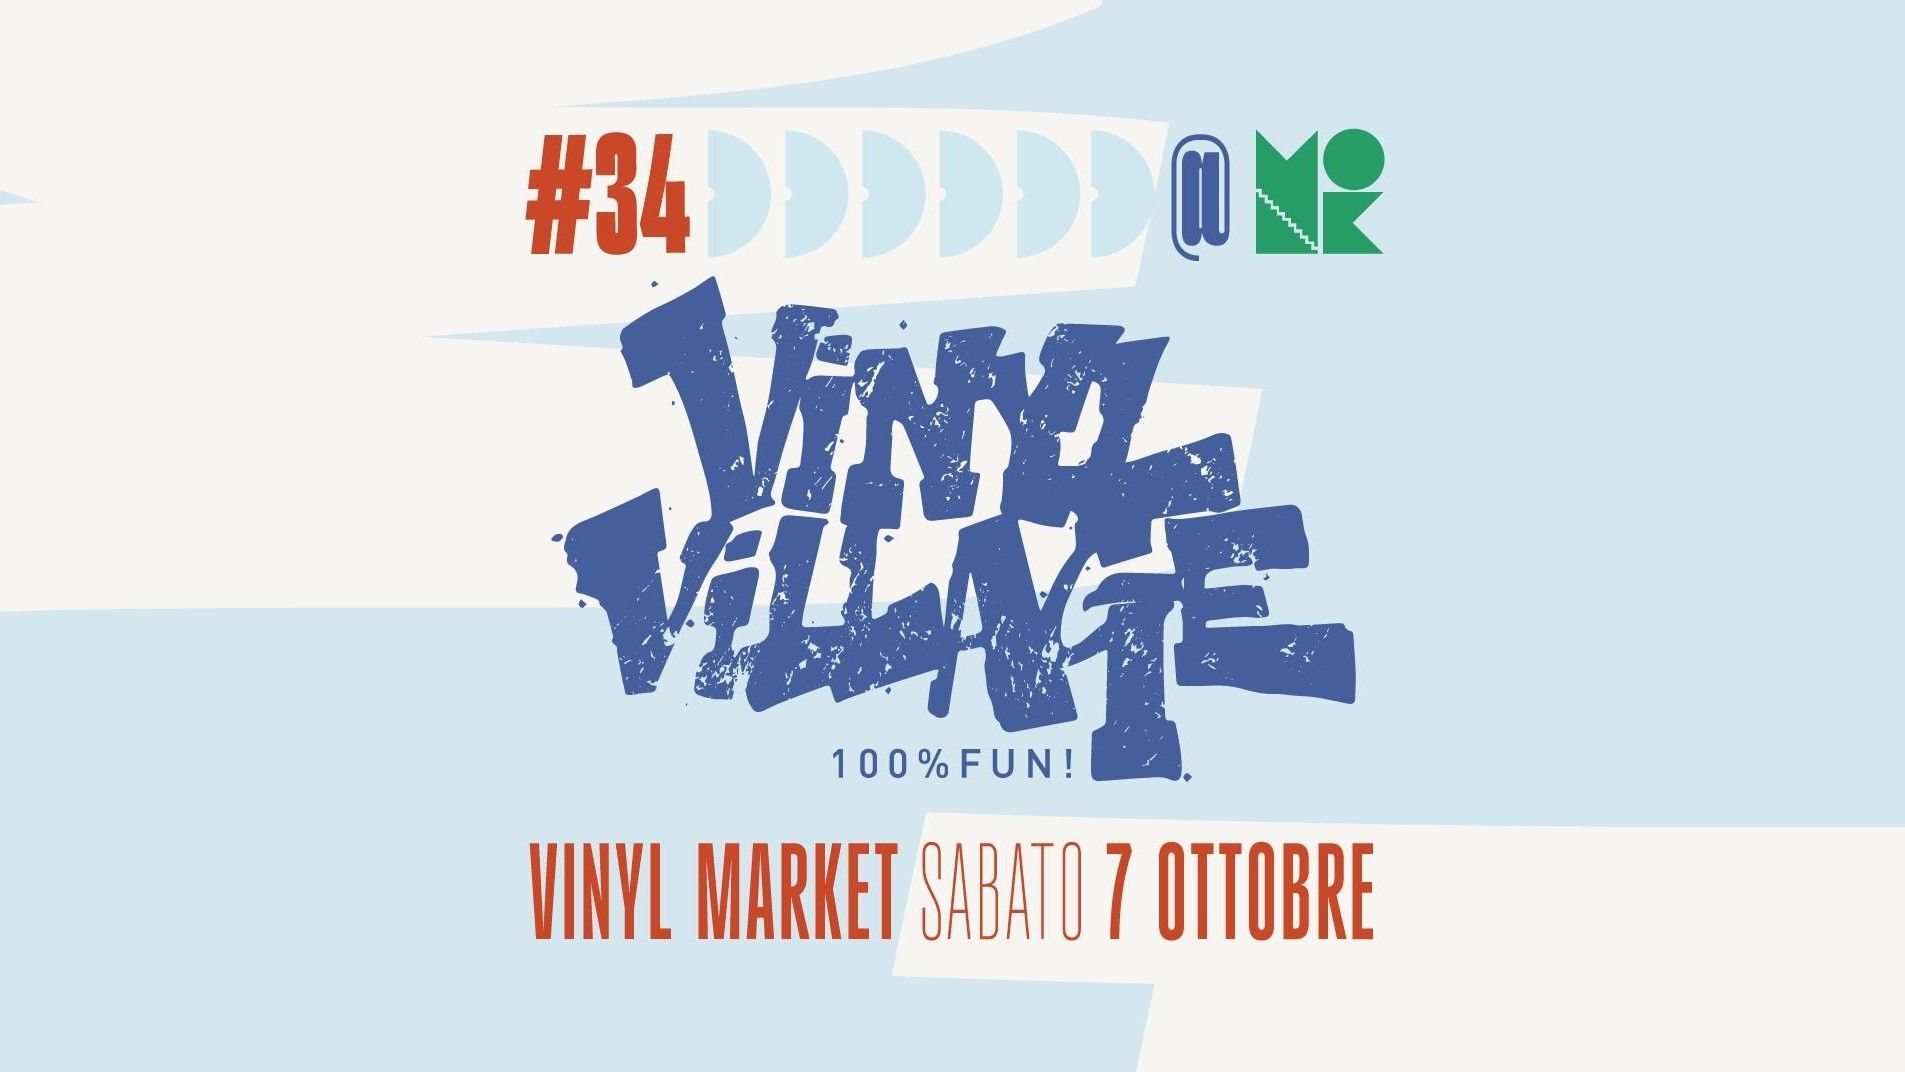 Vinyl Village #34 - Vinyl Market